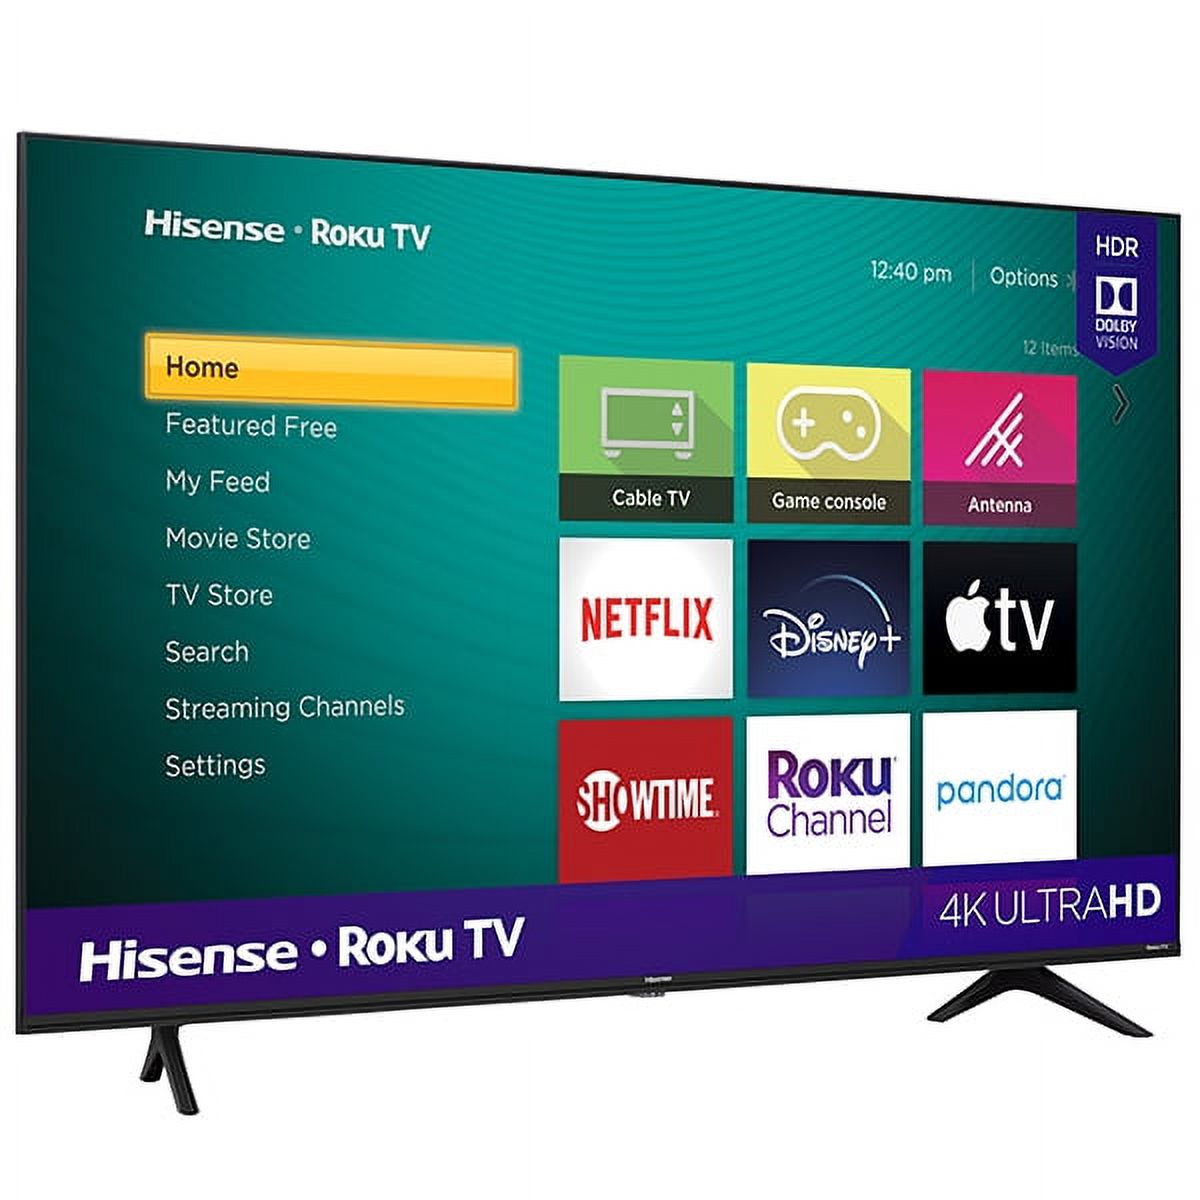 Hisense 75" Class 4K UHD LCD Roku Smart TV HDR R6 Series 75R6030G - image 3 of 7